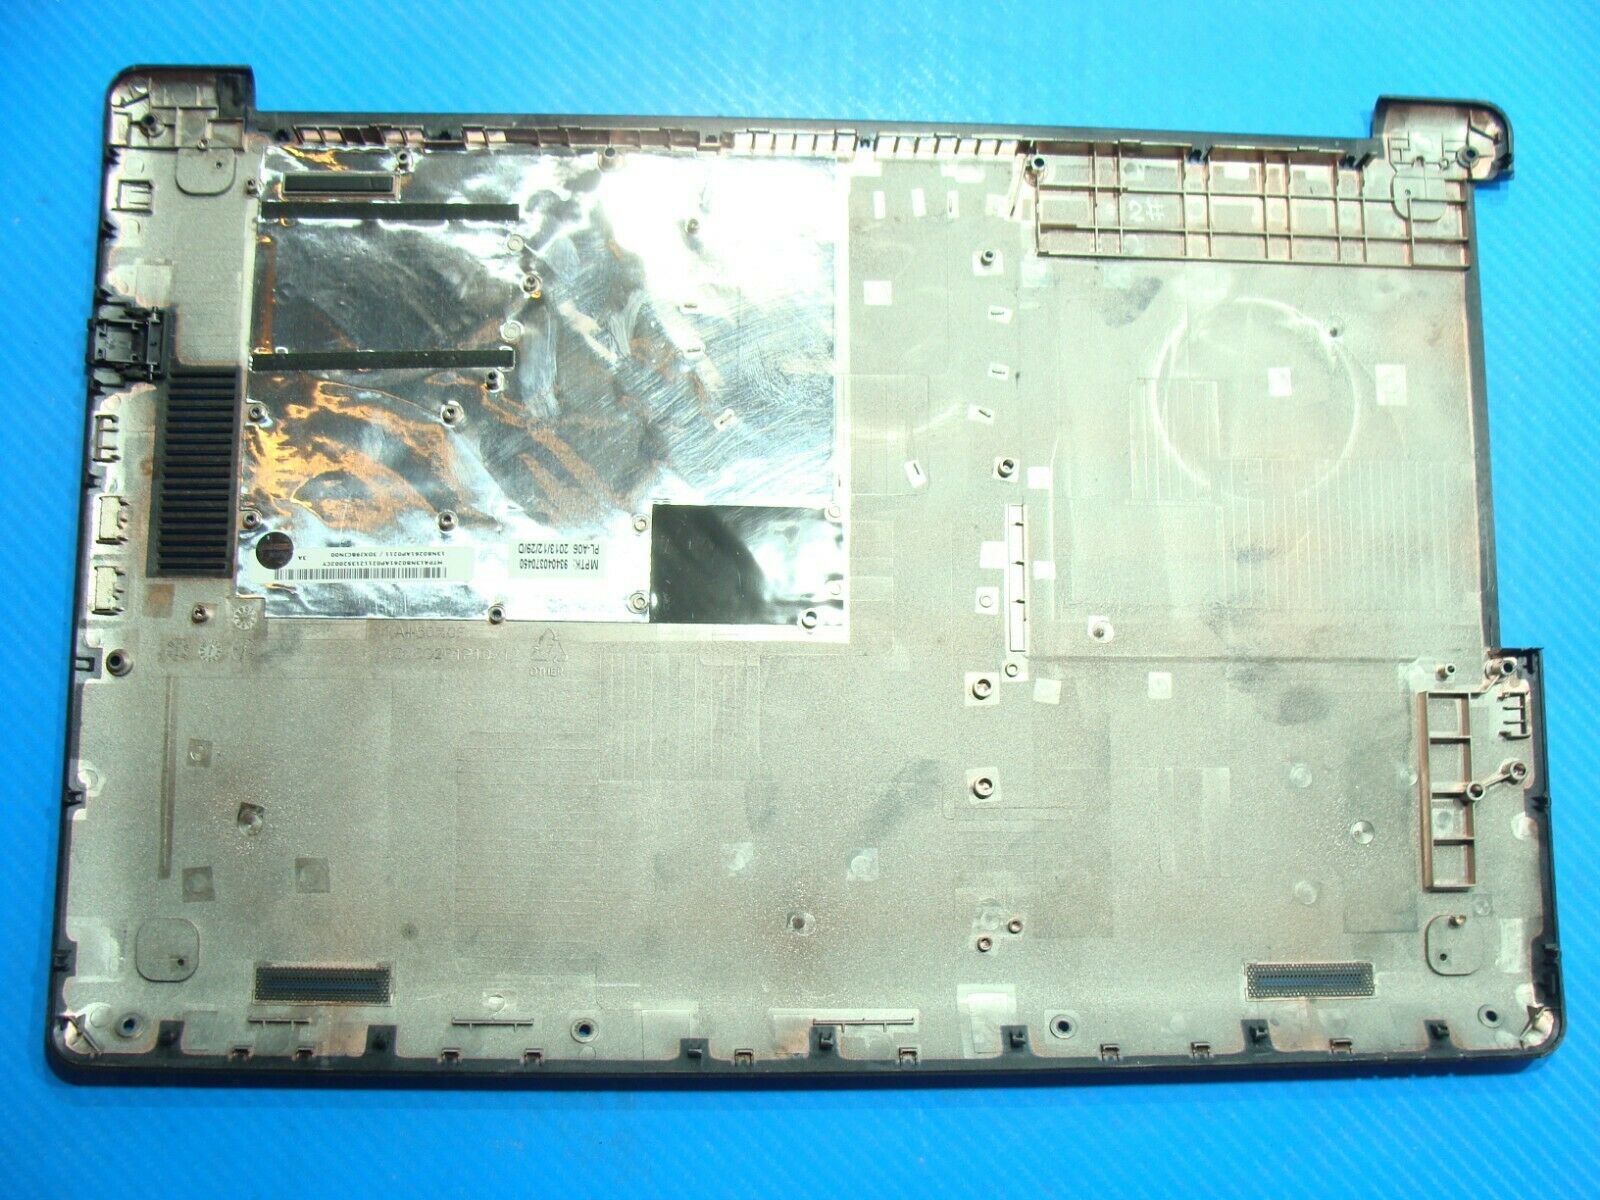 Asus VivoBook V551LA-DH51T 15.6